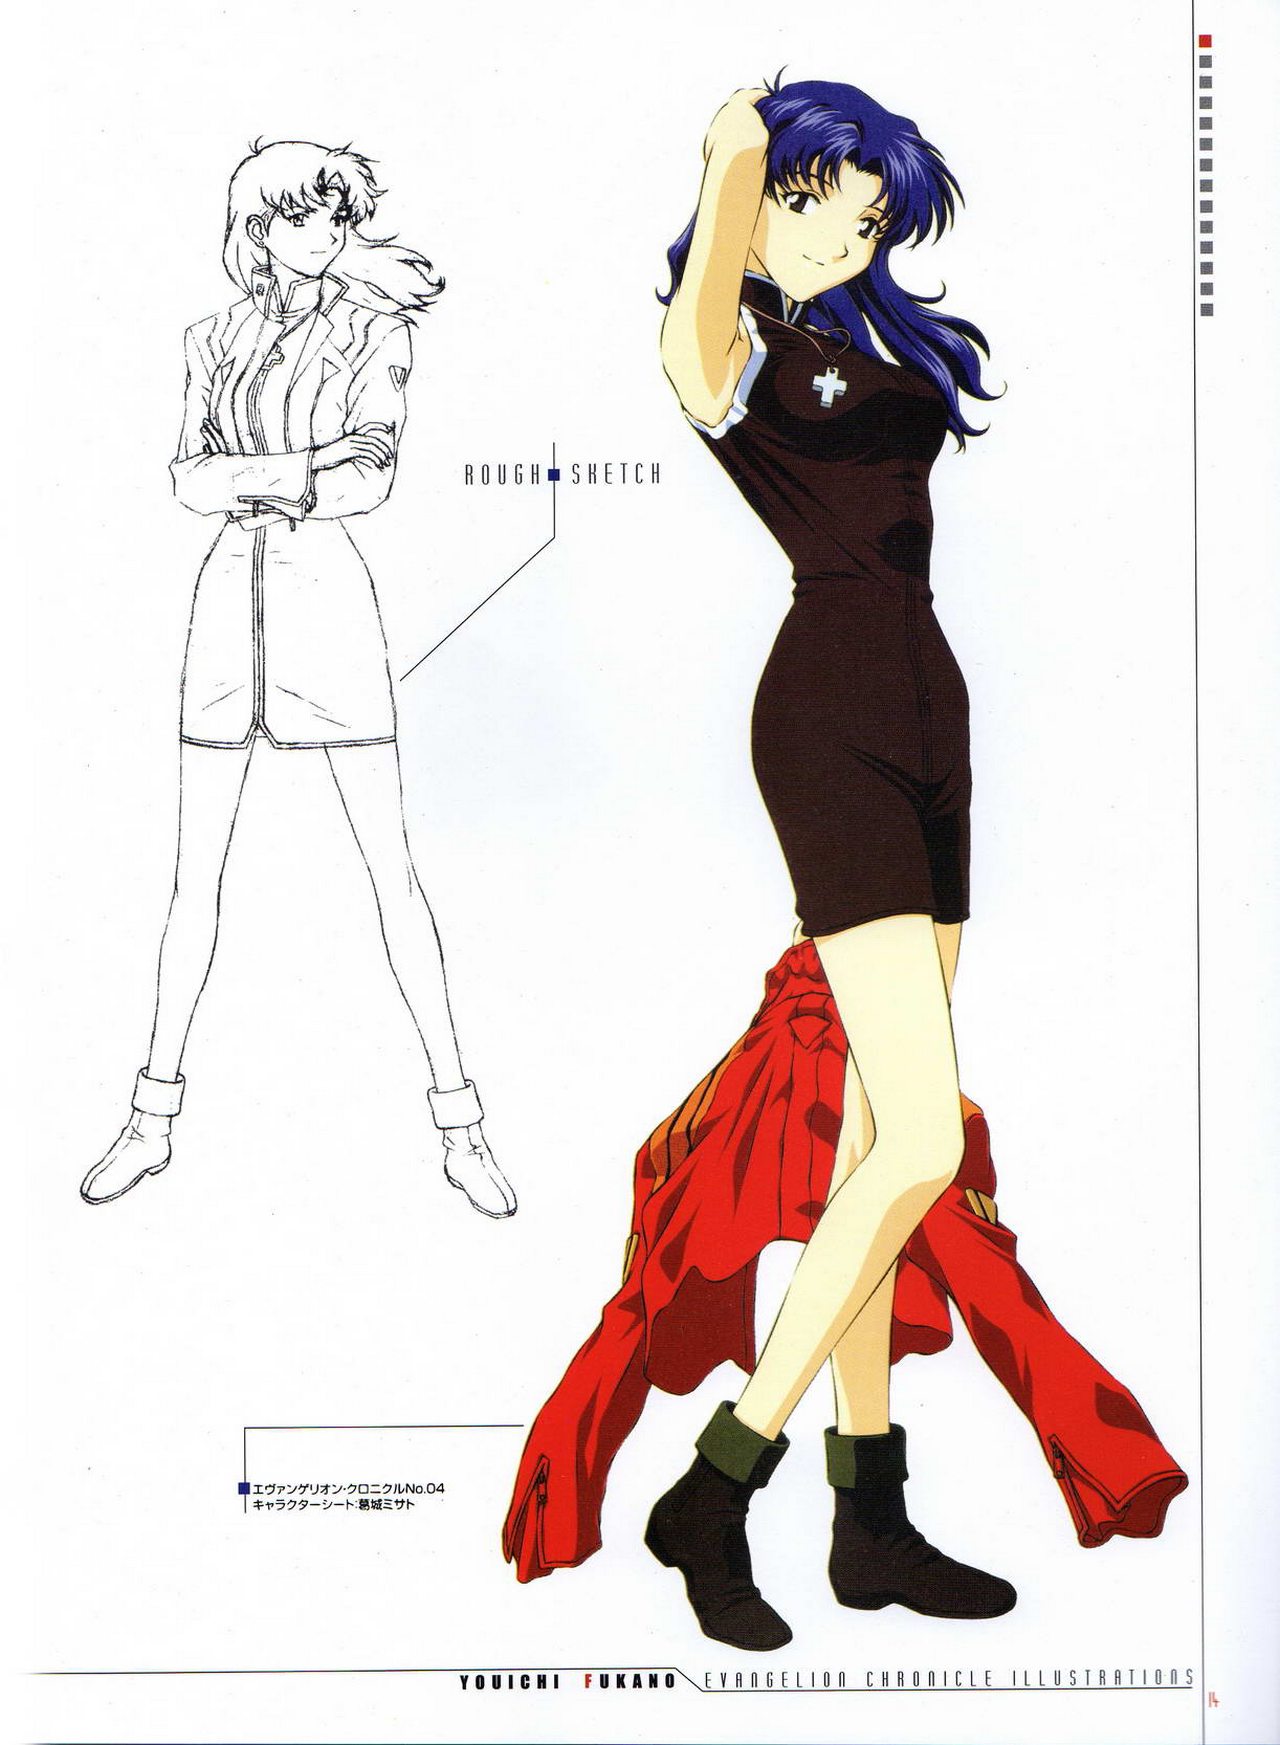 Anime 1280x1745 Neon Genesis Evangelion concept art Katsuragi Misato dress